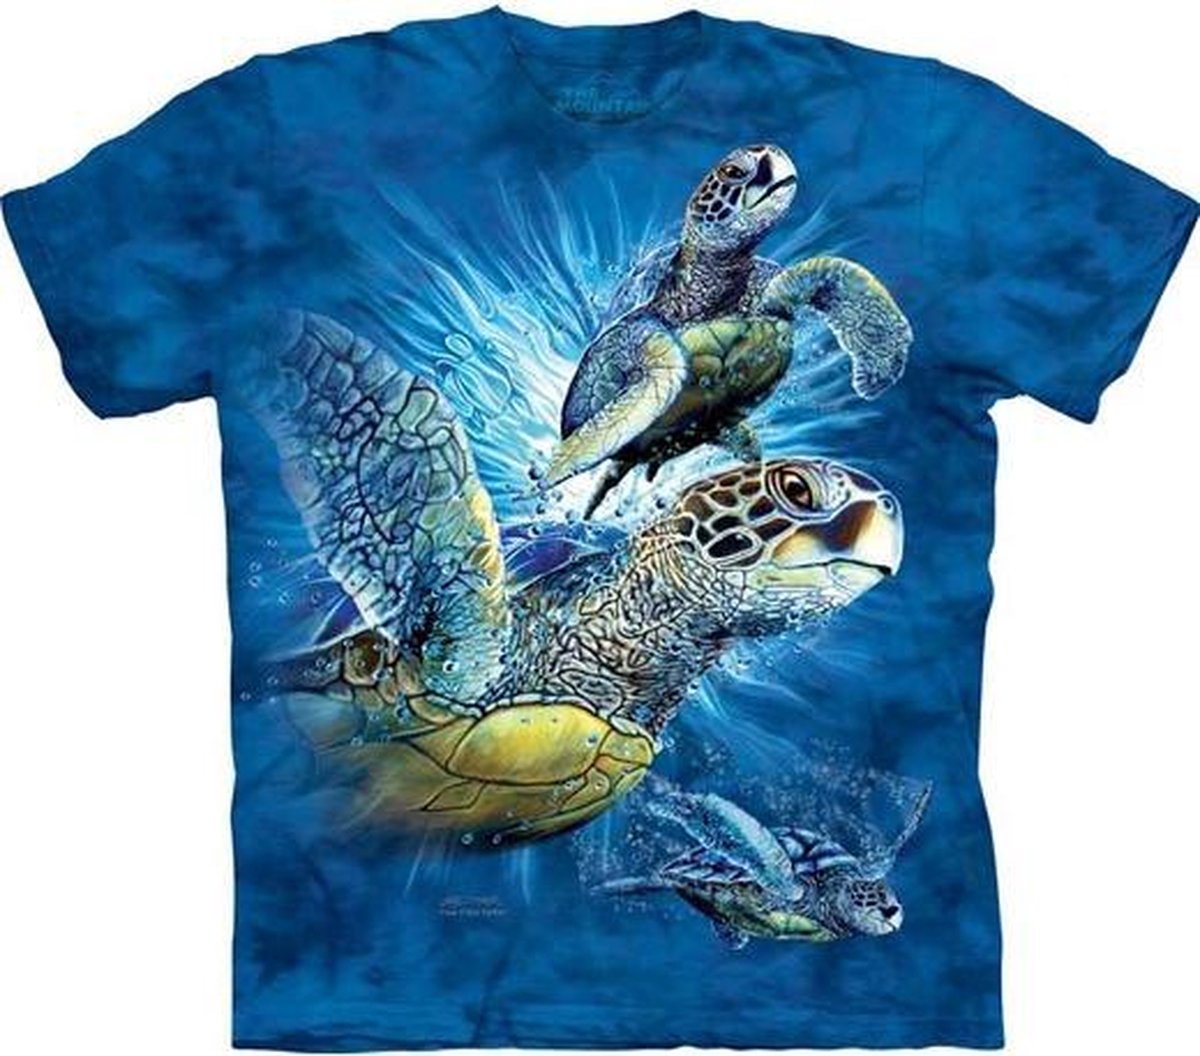 T-shirt Find 9 Sea Turtles XL